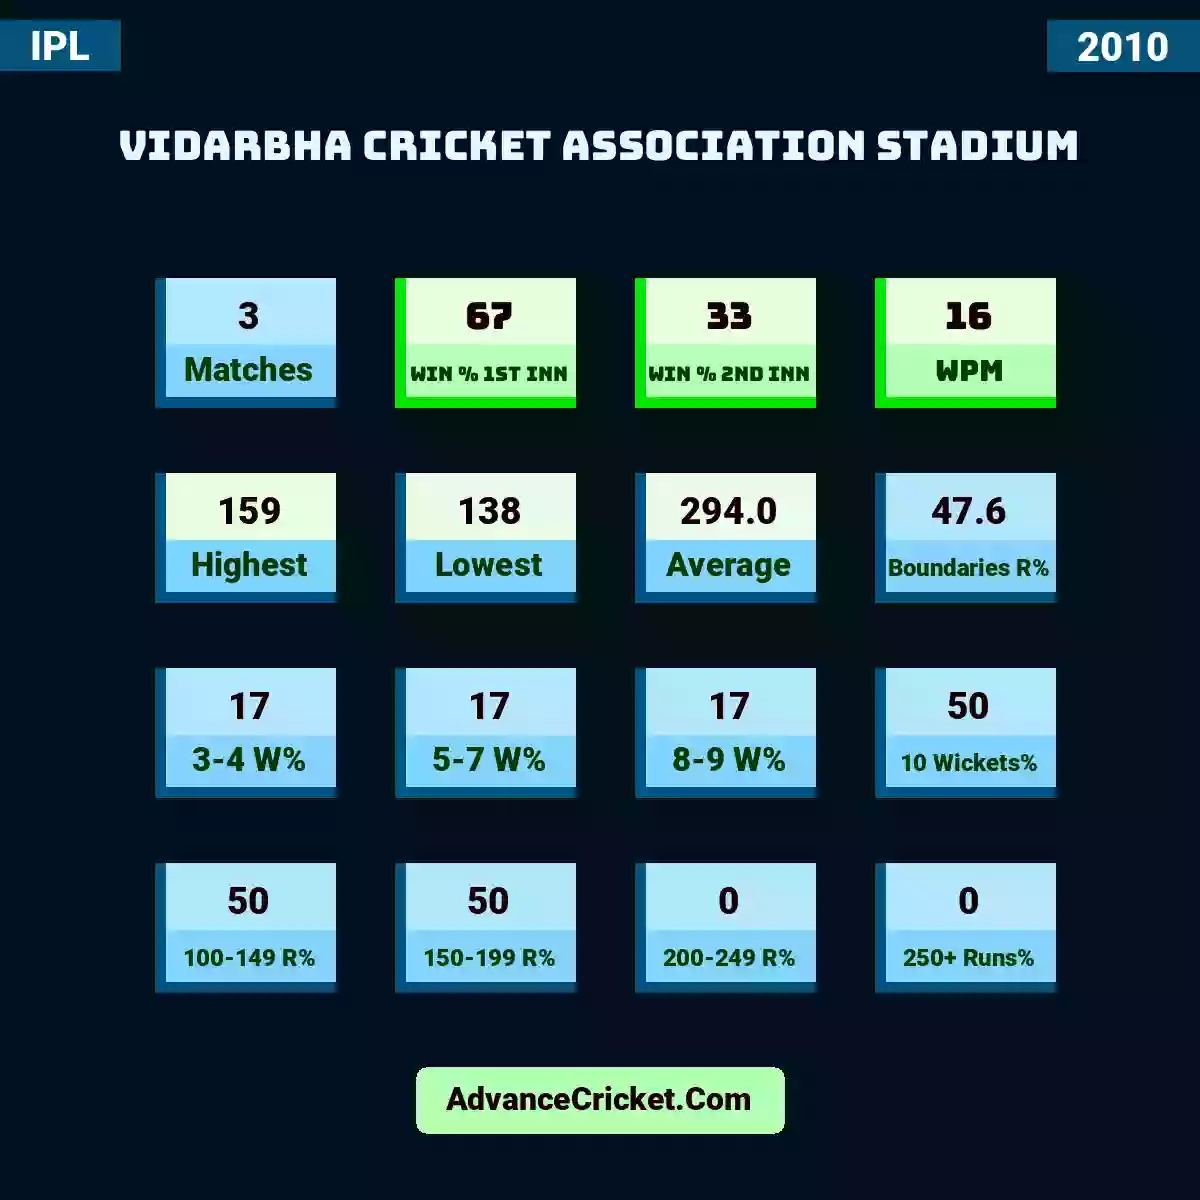 Image showing Vidarbha Cricket Association Stadium with Matches: 3, Win % 1st Inn: 67, Win % 2nd Inn: 33, WPM: 16, Highest: 159, Lowest: 138, Average: 294.0, Boundaries R%: 47.6, 3-4 W%: 17, 5-7 W%: 17, 8-9 W%: 17, 10 Wickets%: 50, 100-149 R%: 50, 150-199 R%: 50, 200-249 R%: 0, 250+ Runs%: 0.